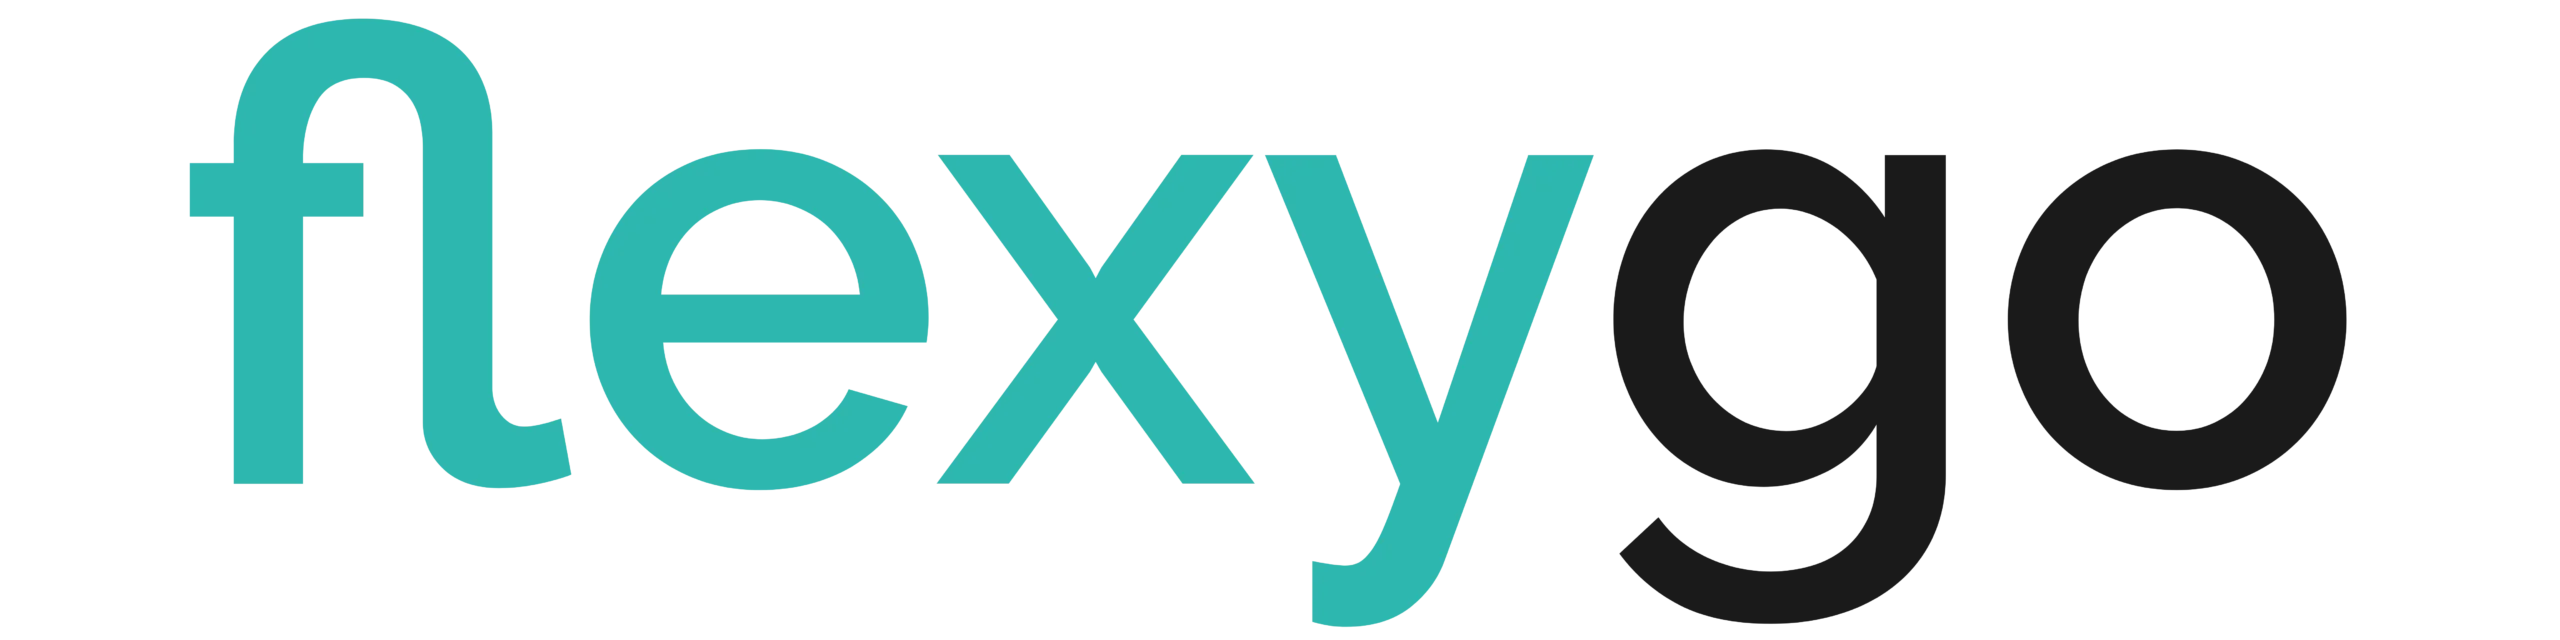 Lowcode Flexygo logo